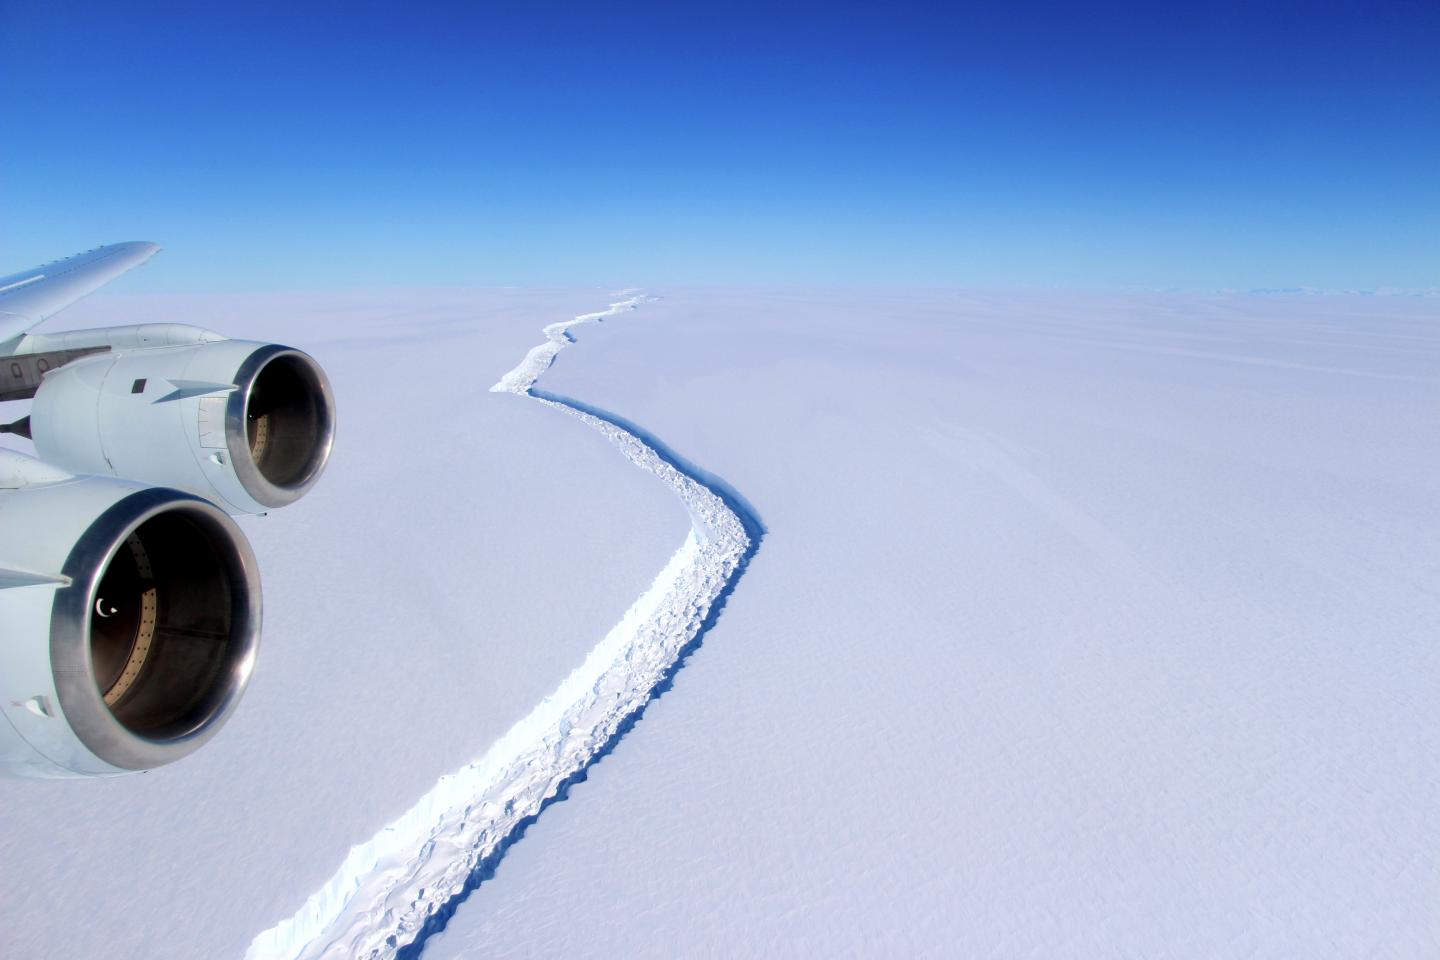 Larsen C Ice Rift -- Aerial View